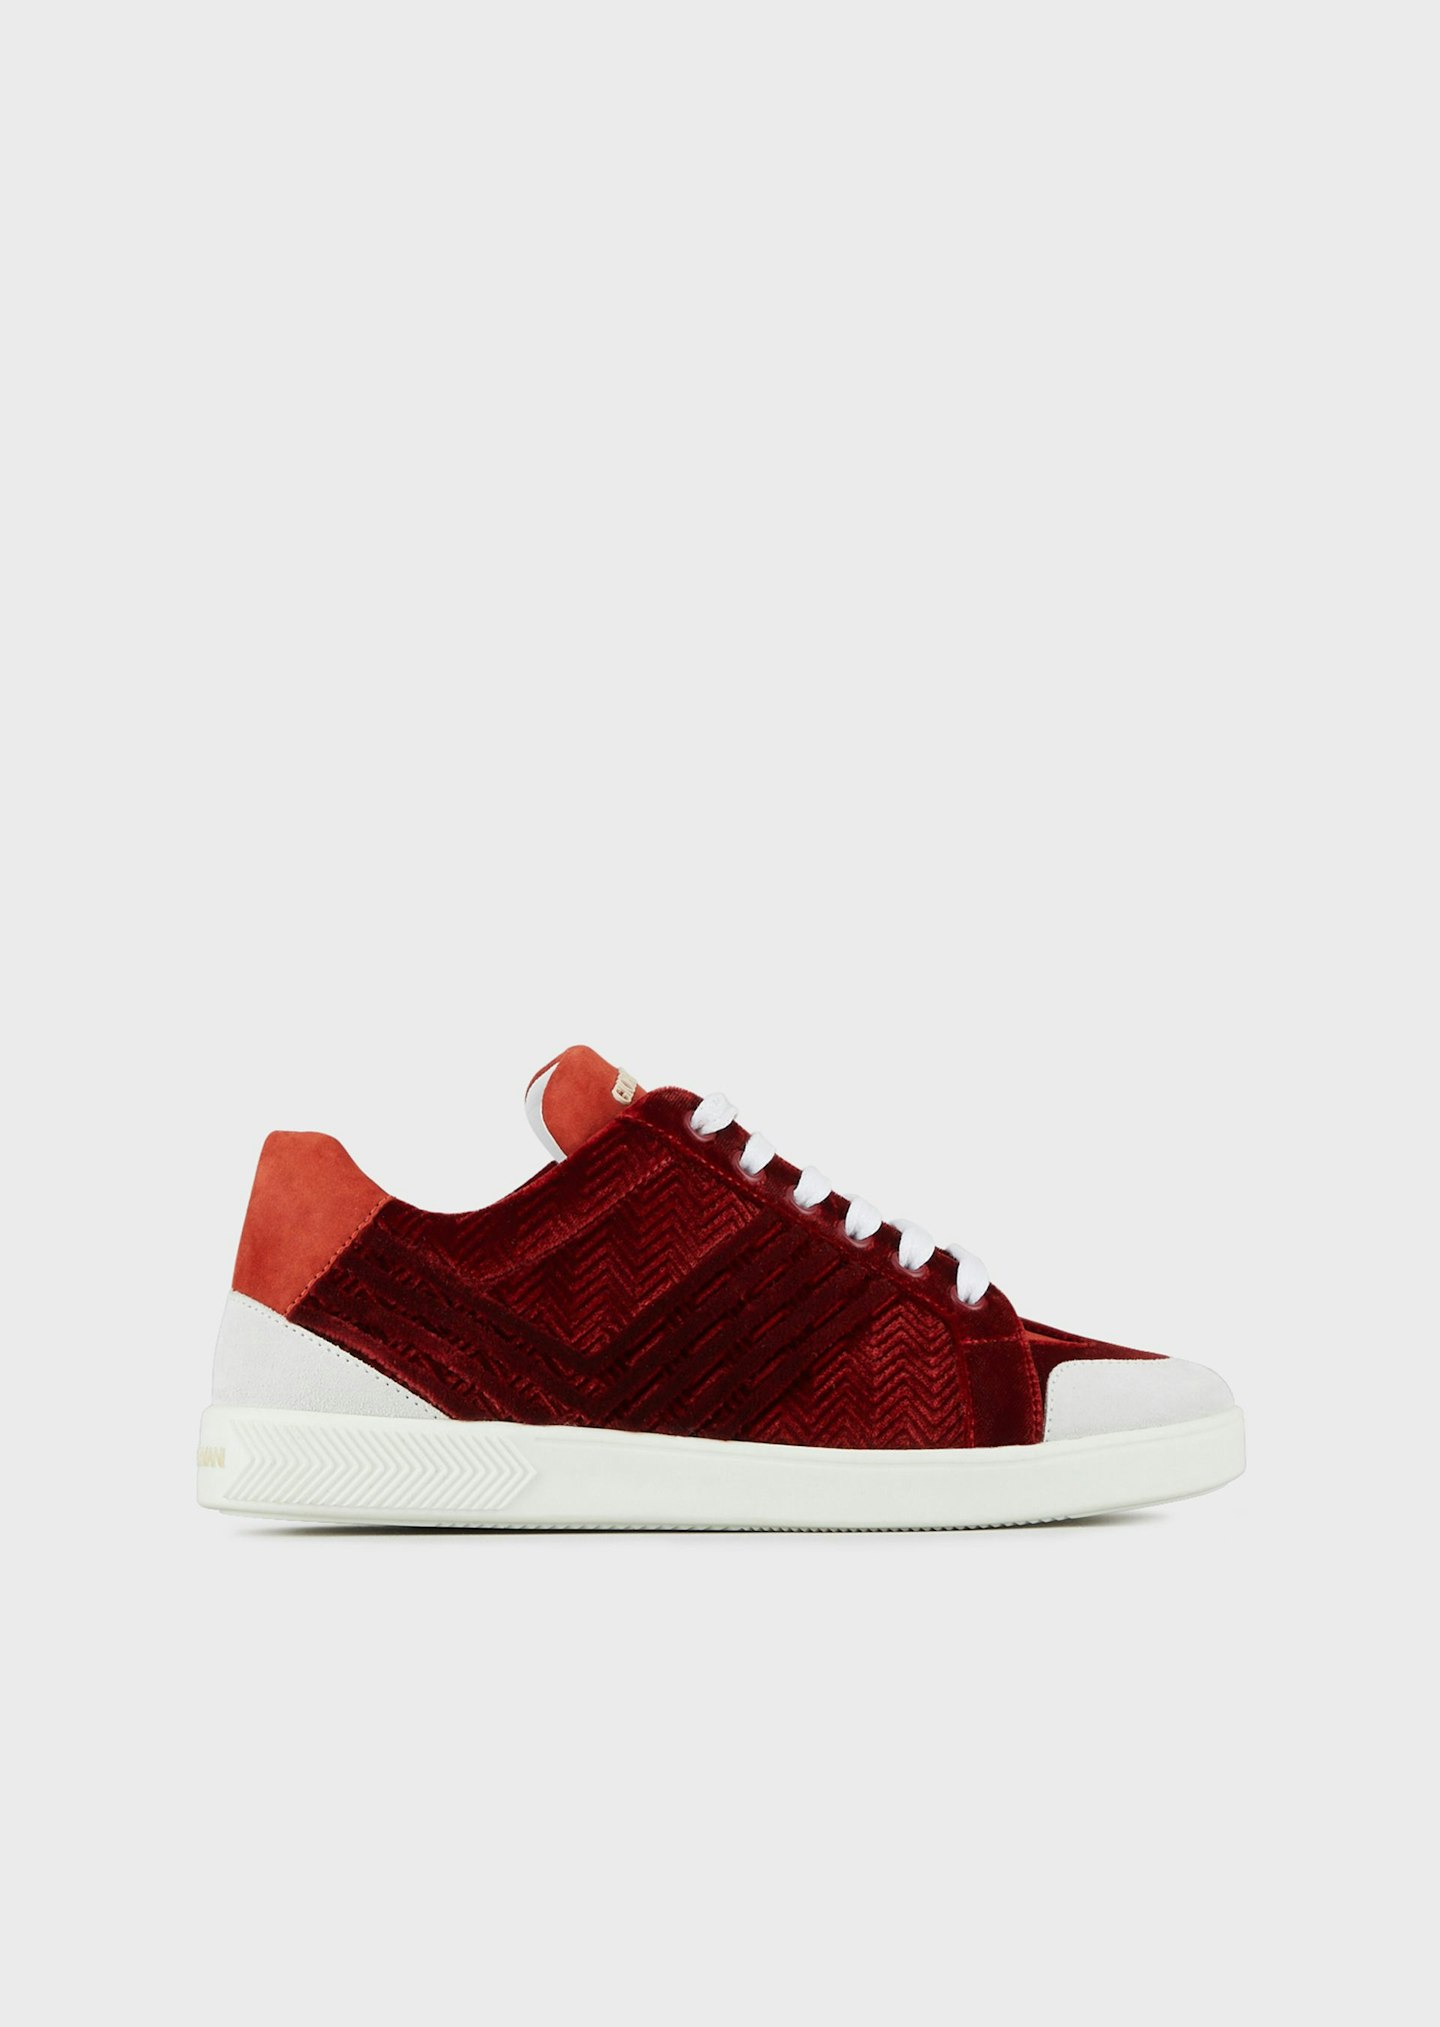 GIORGIO ARMANI, Leather And Velvet Sneaker, £590